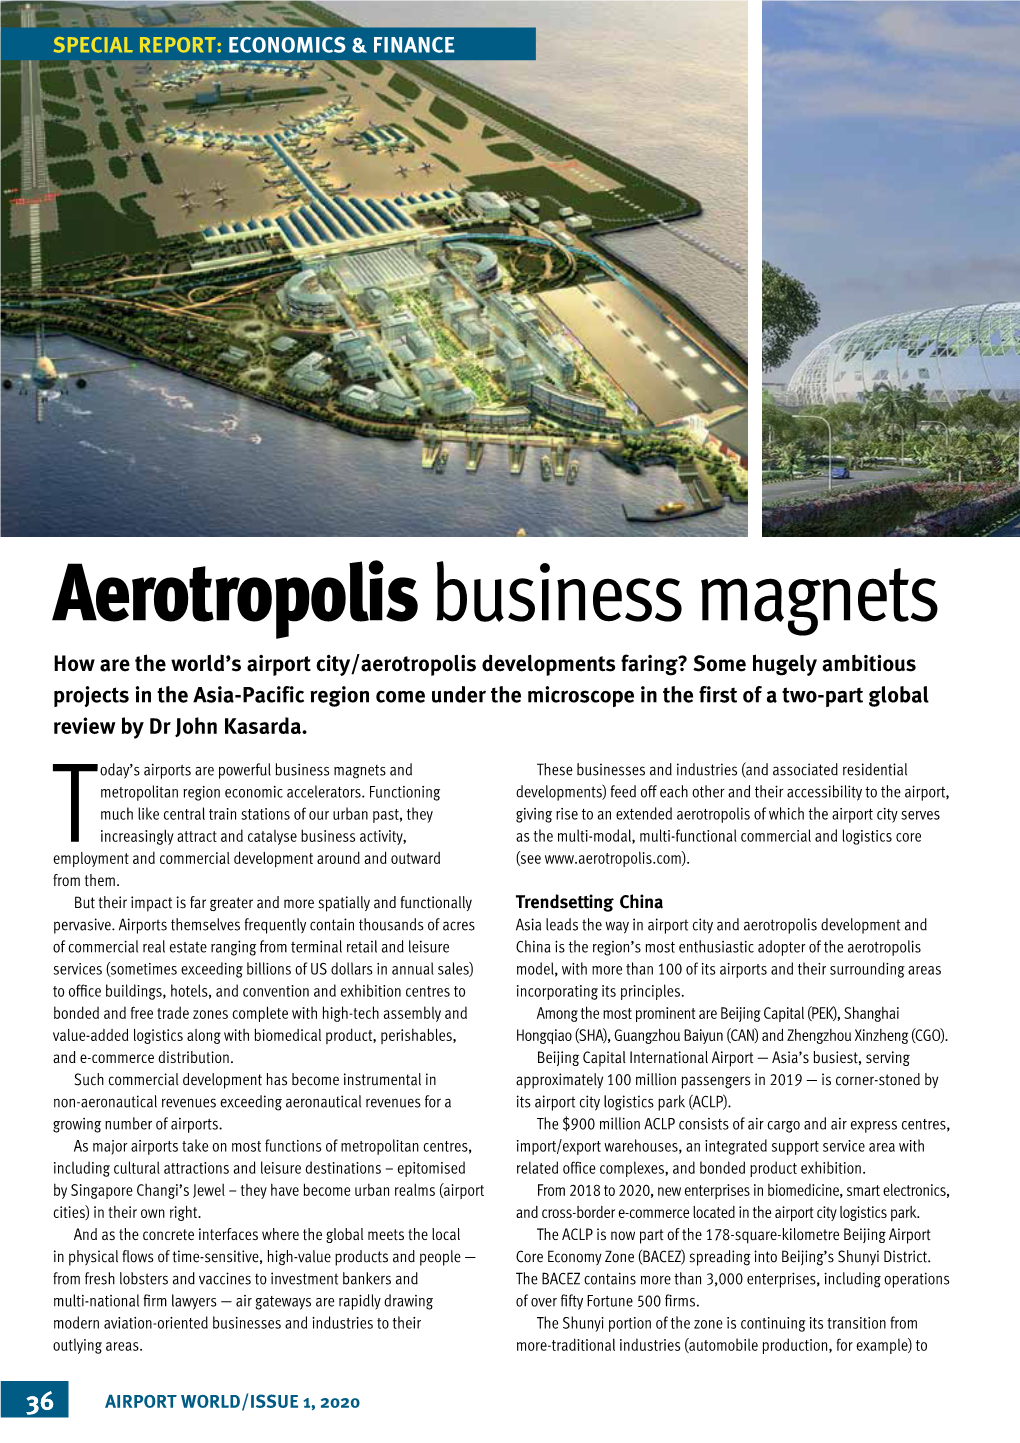 Aerotropolis Business Magnets